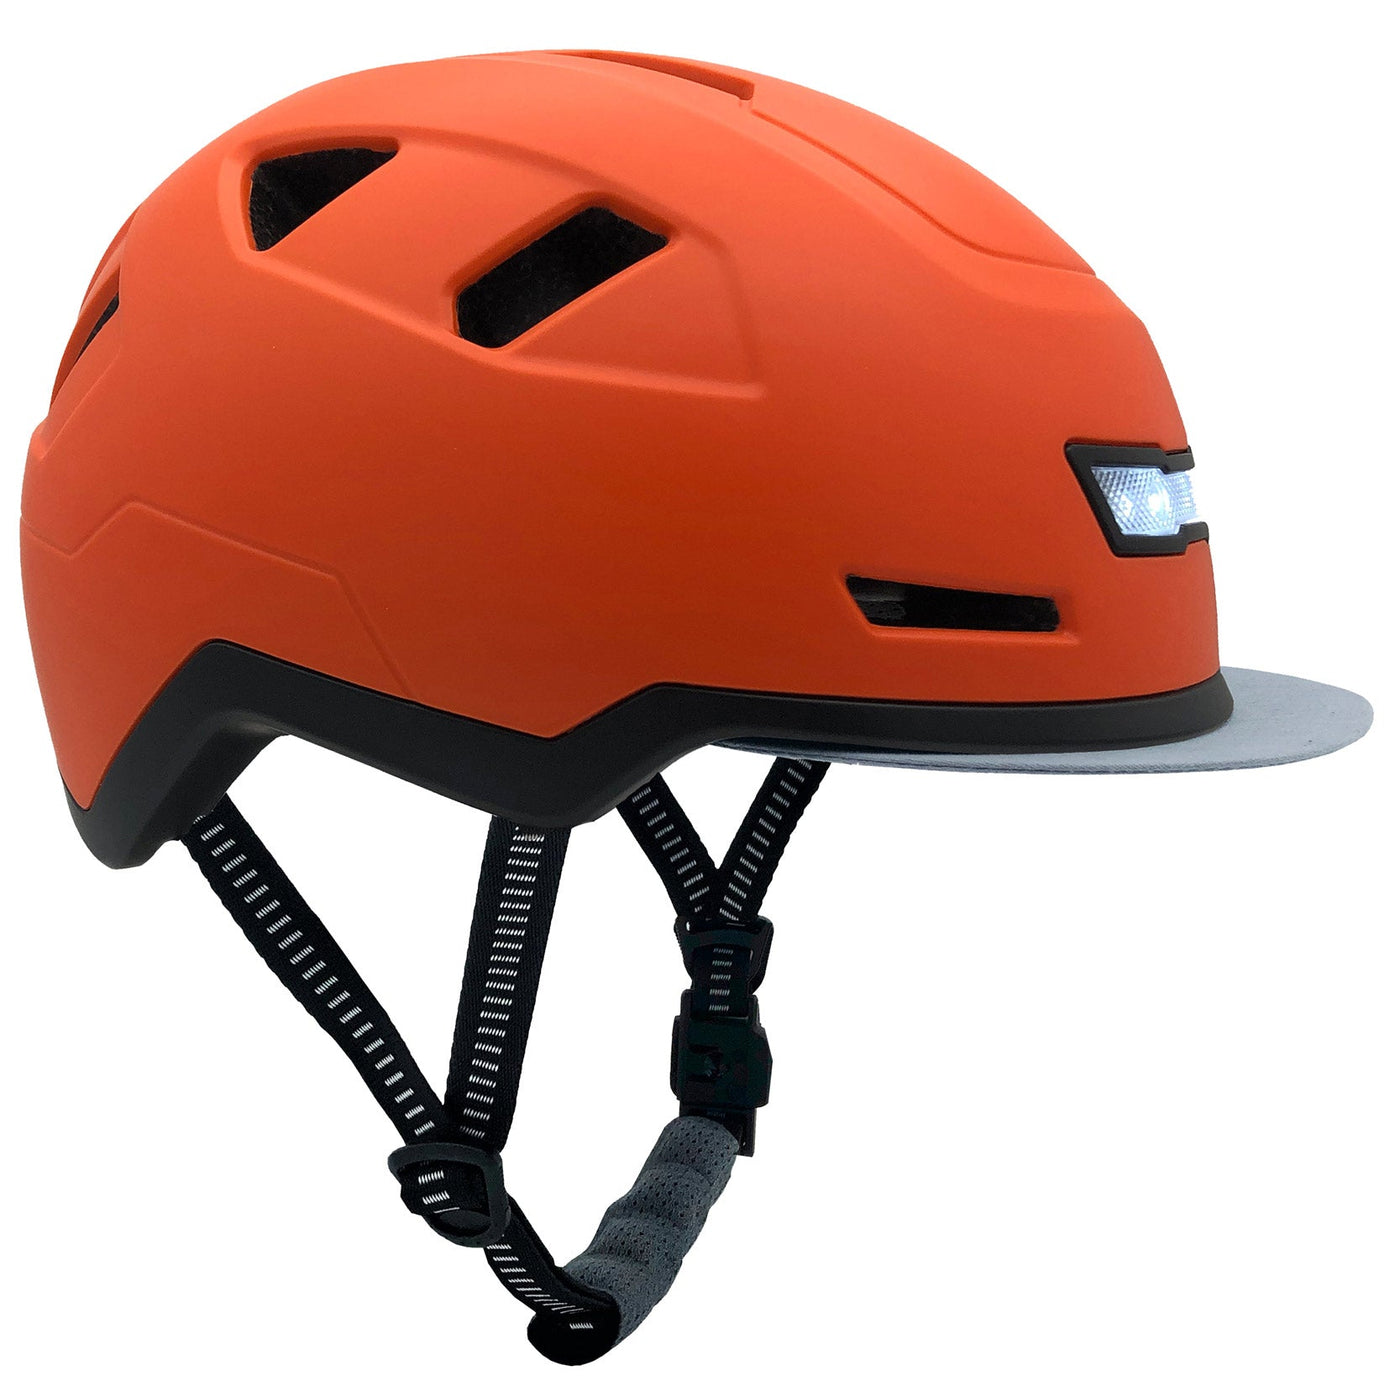 side view of ebike helmet with visor - dutch orange